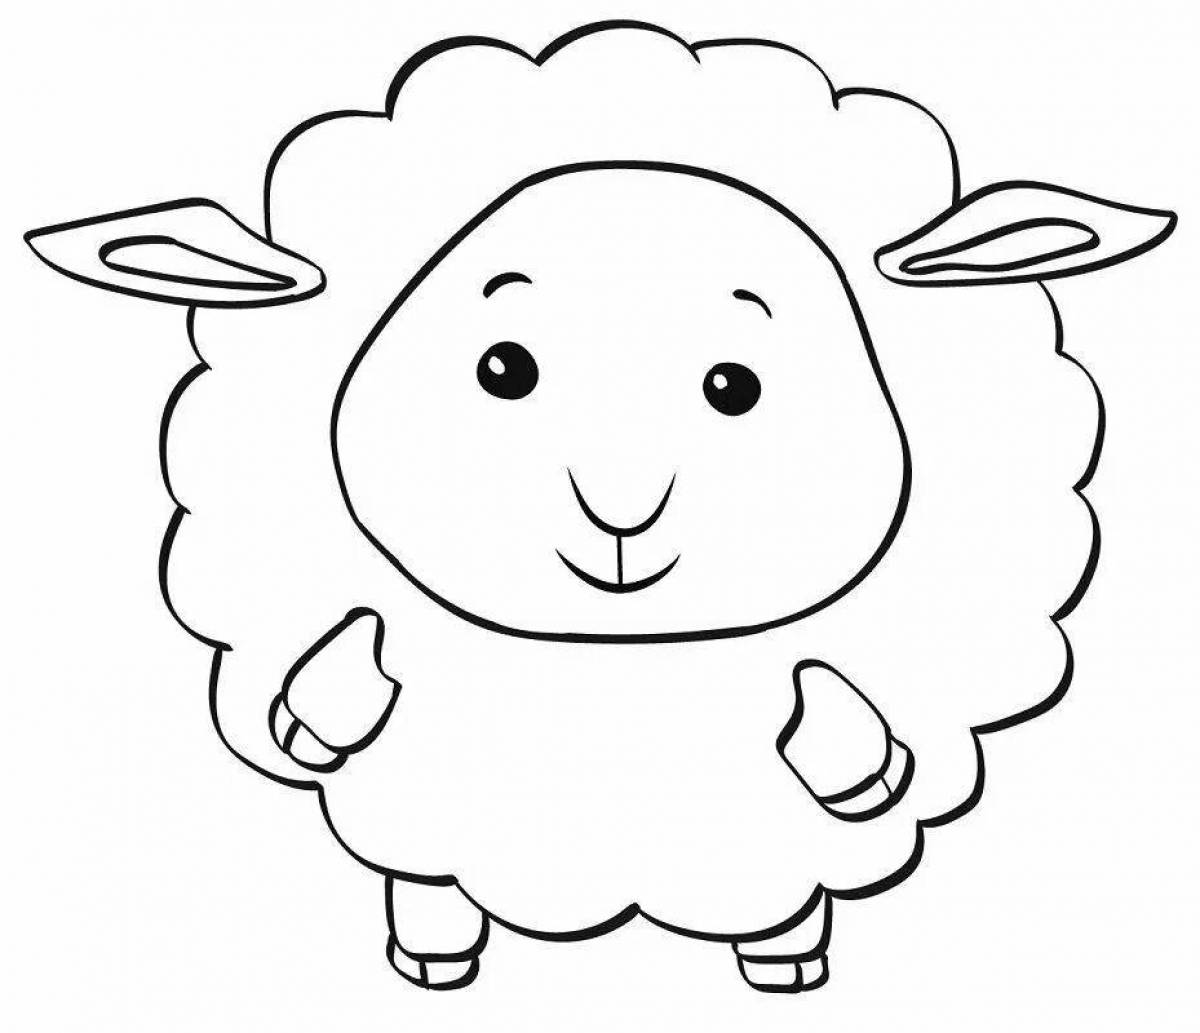 Adorable lamb coloring book